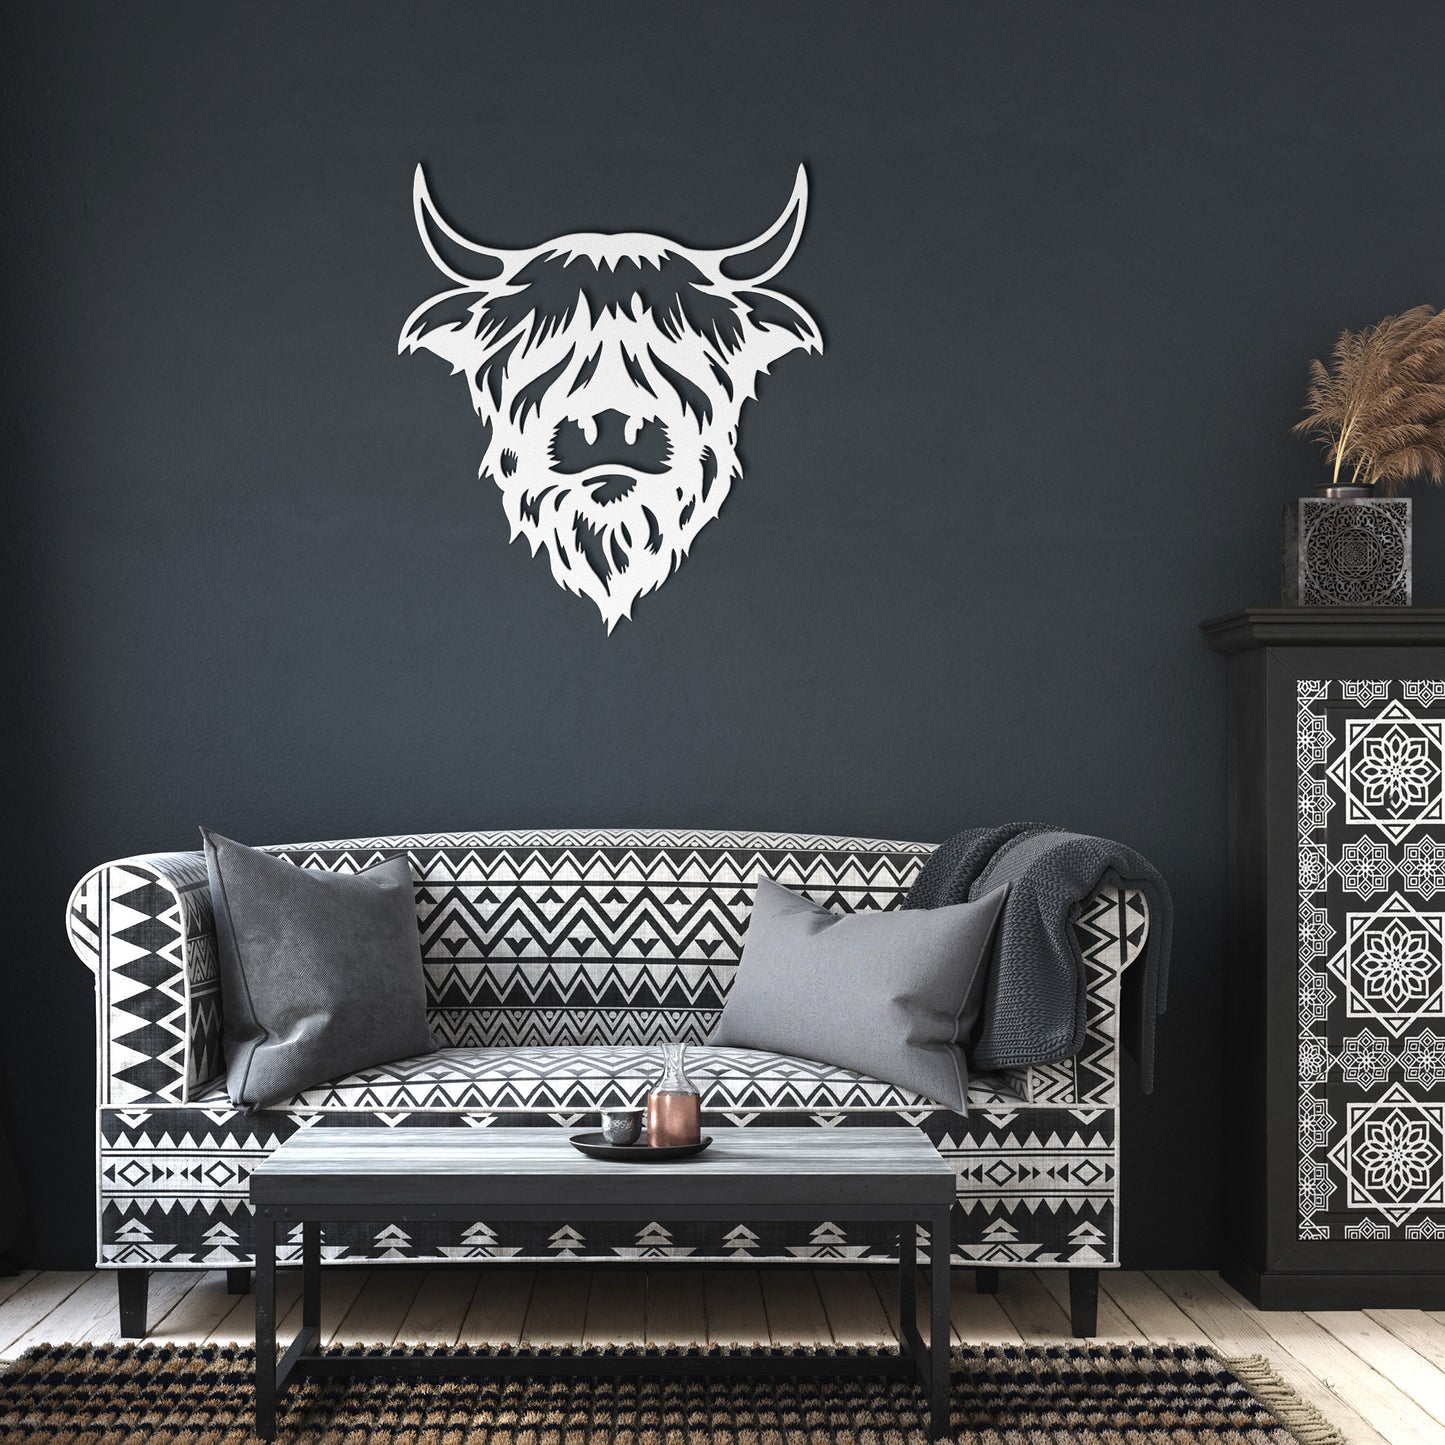 Scottish Highland Cow Wall Decor - Durable Metal Art - Indoor/Outdoor